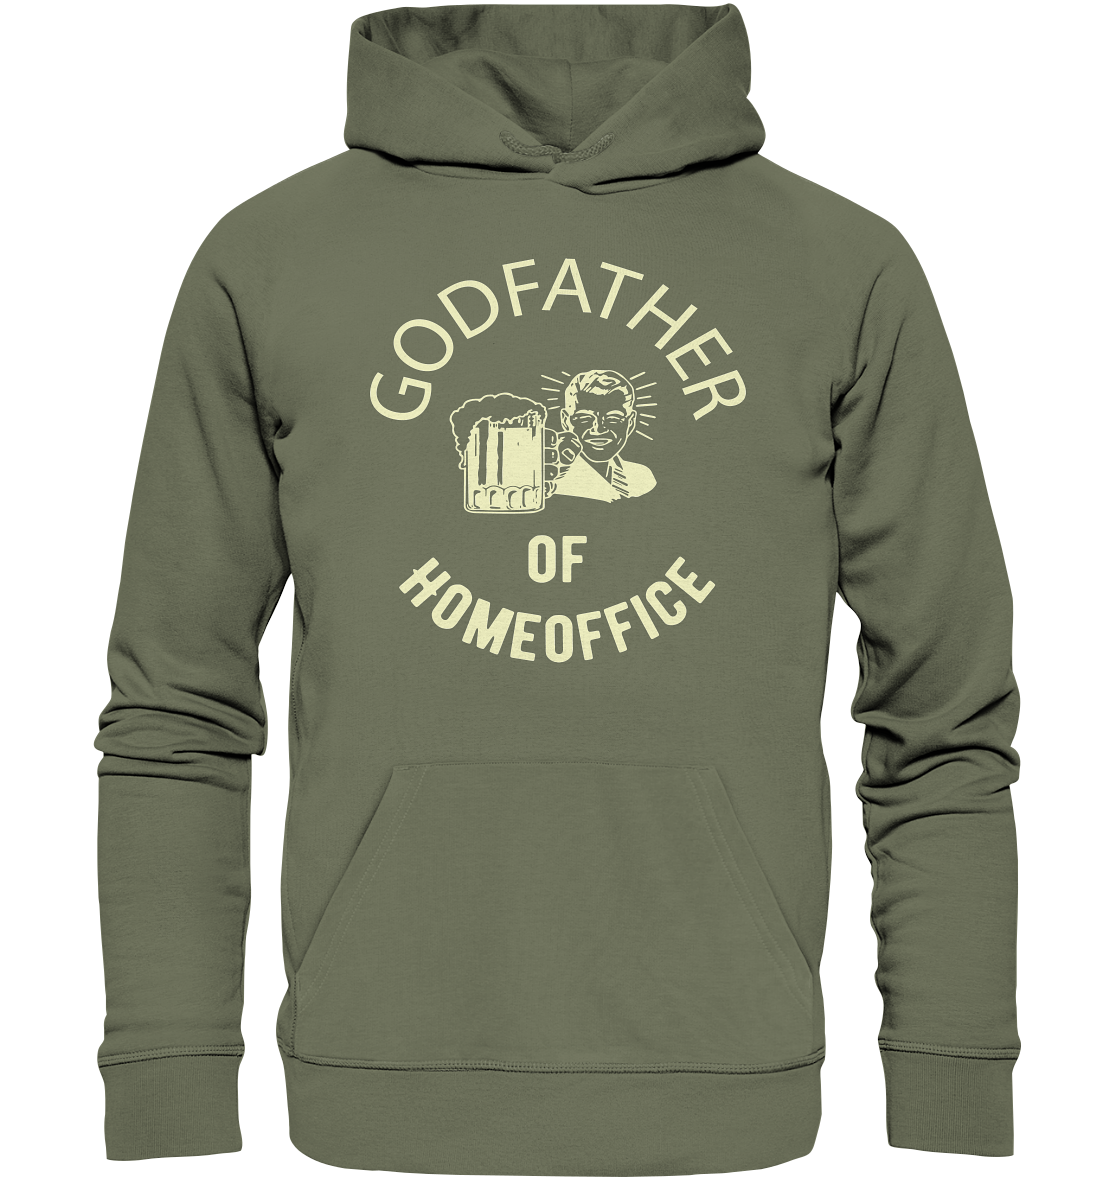 Godfather of Homeoffice - Premium Unisex Hoodie